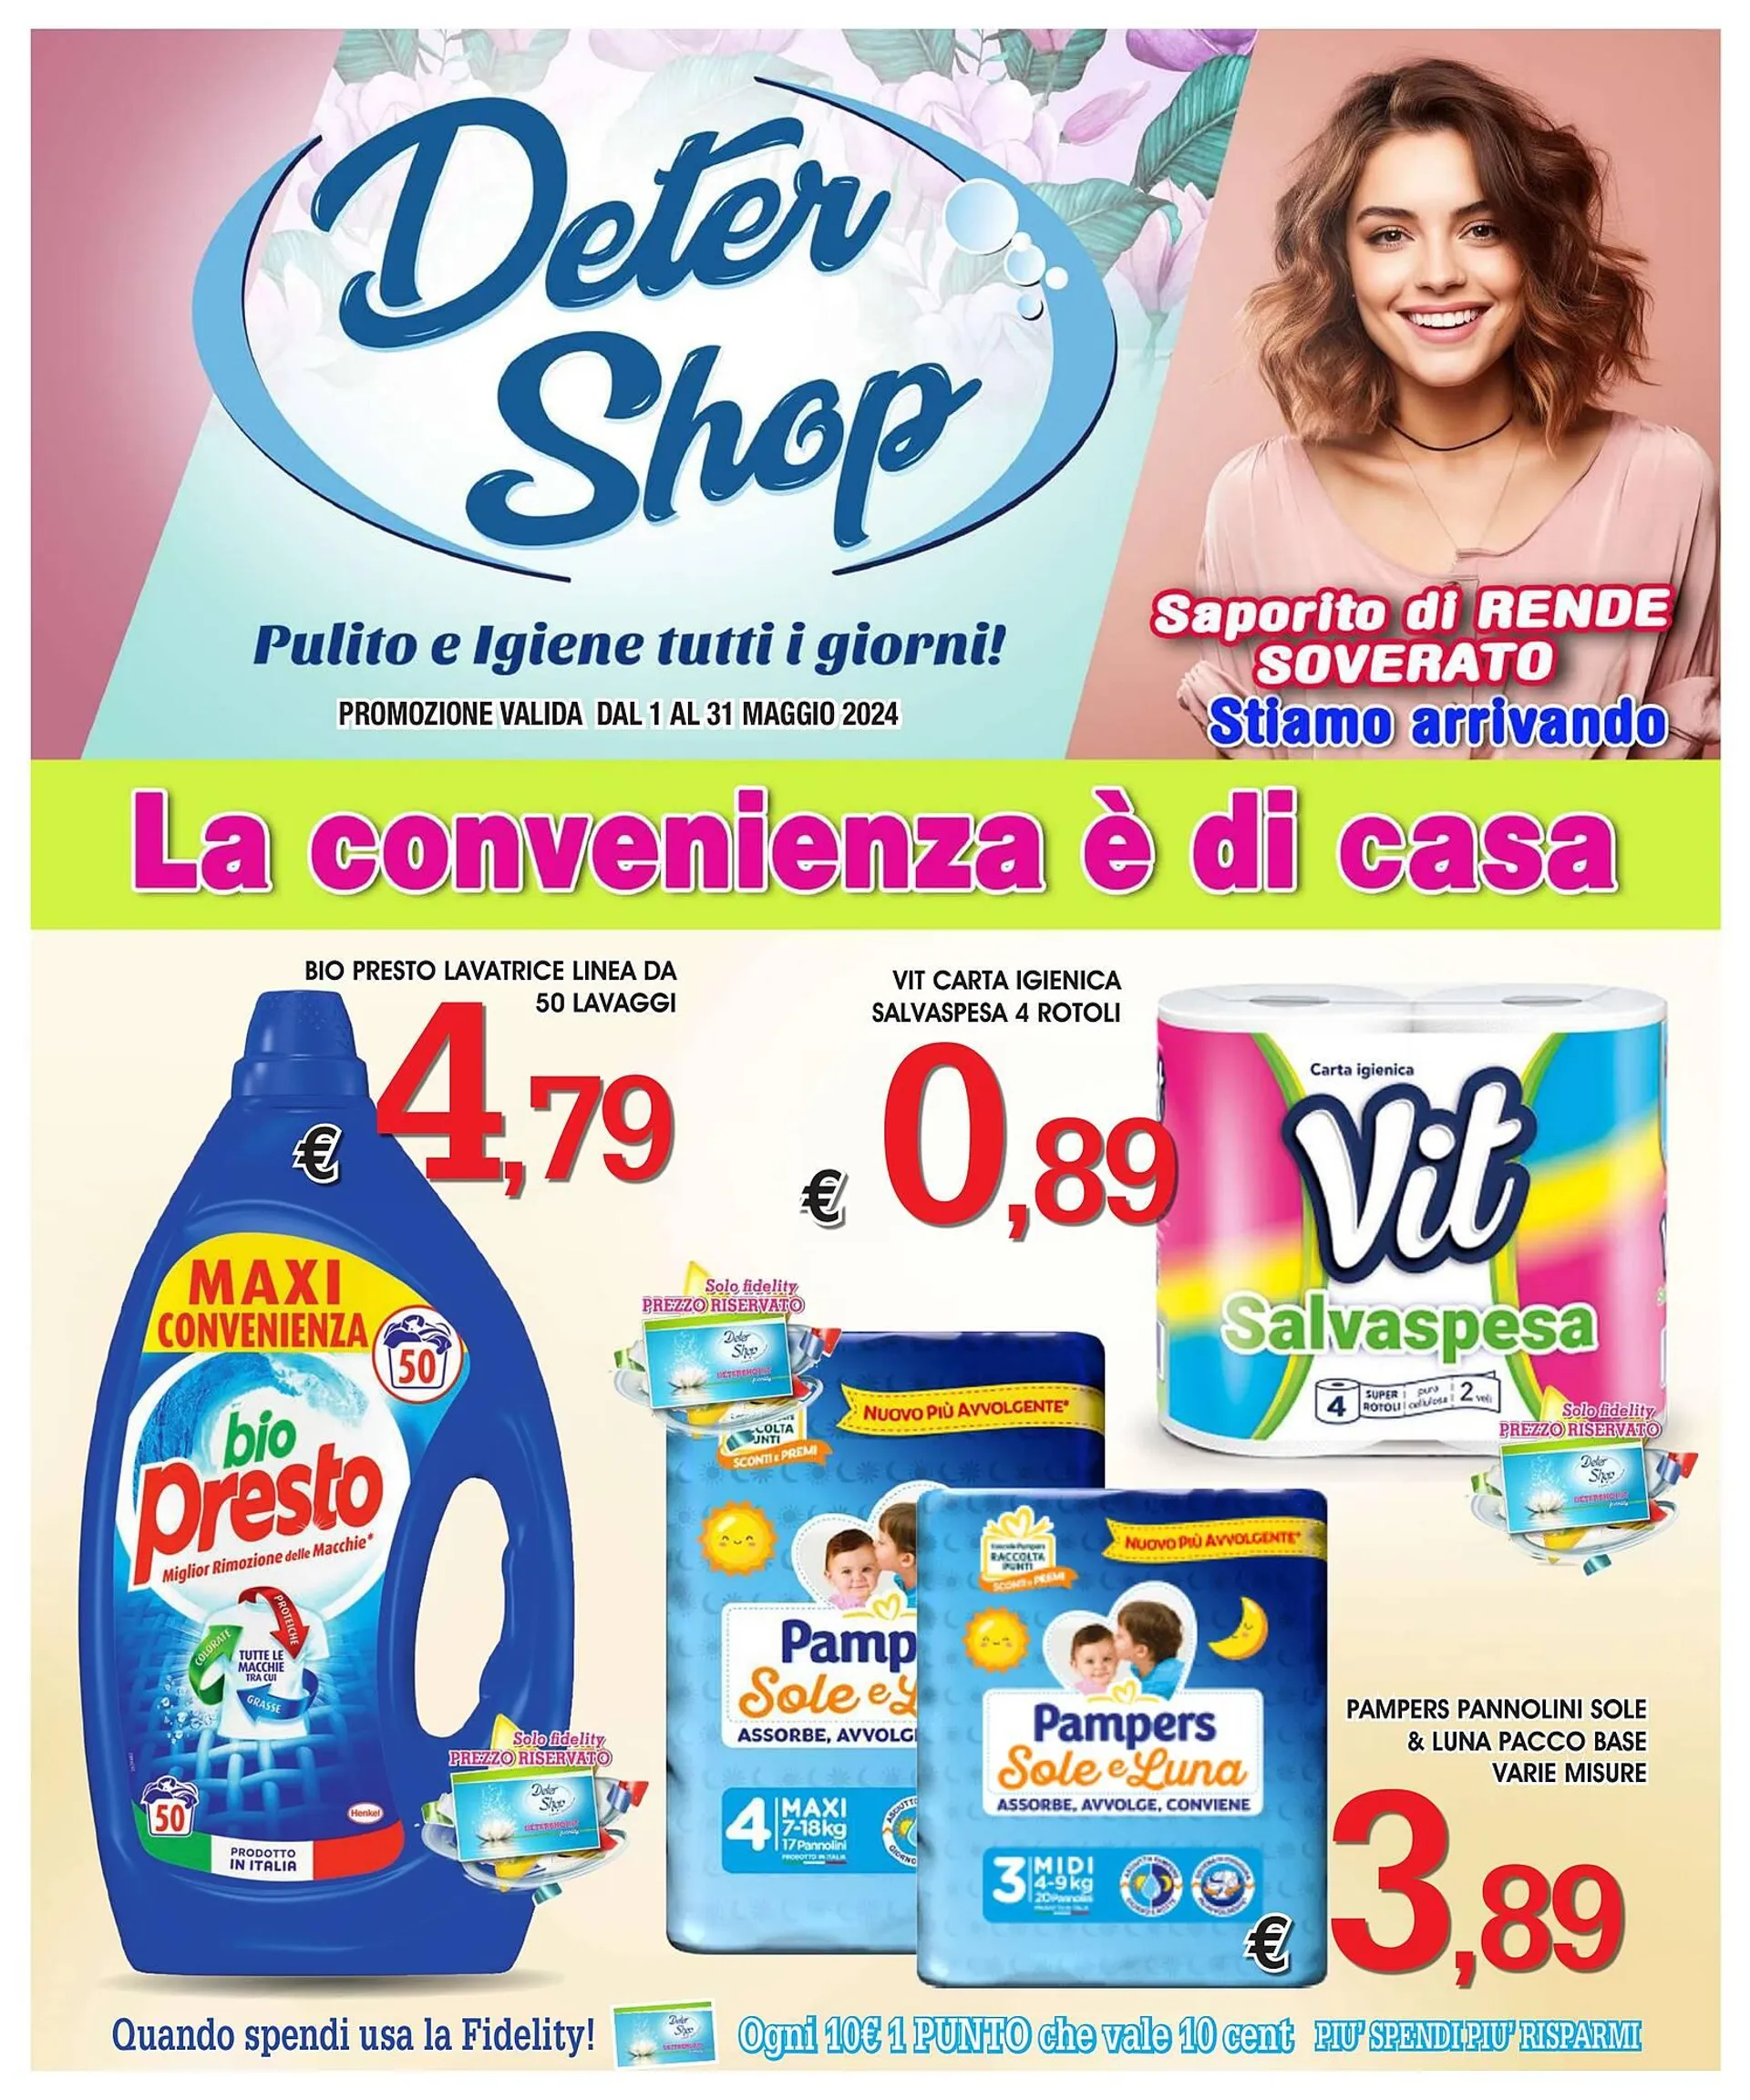 Volantino Deter Shop - 1